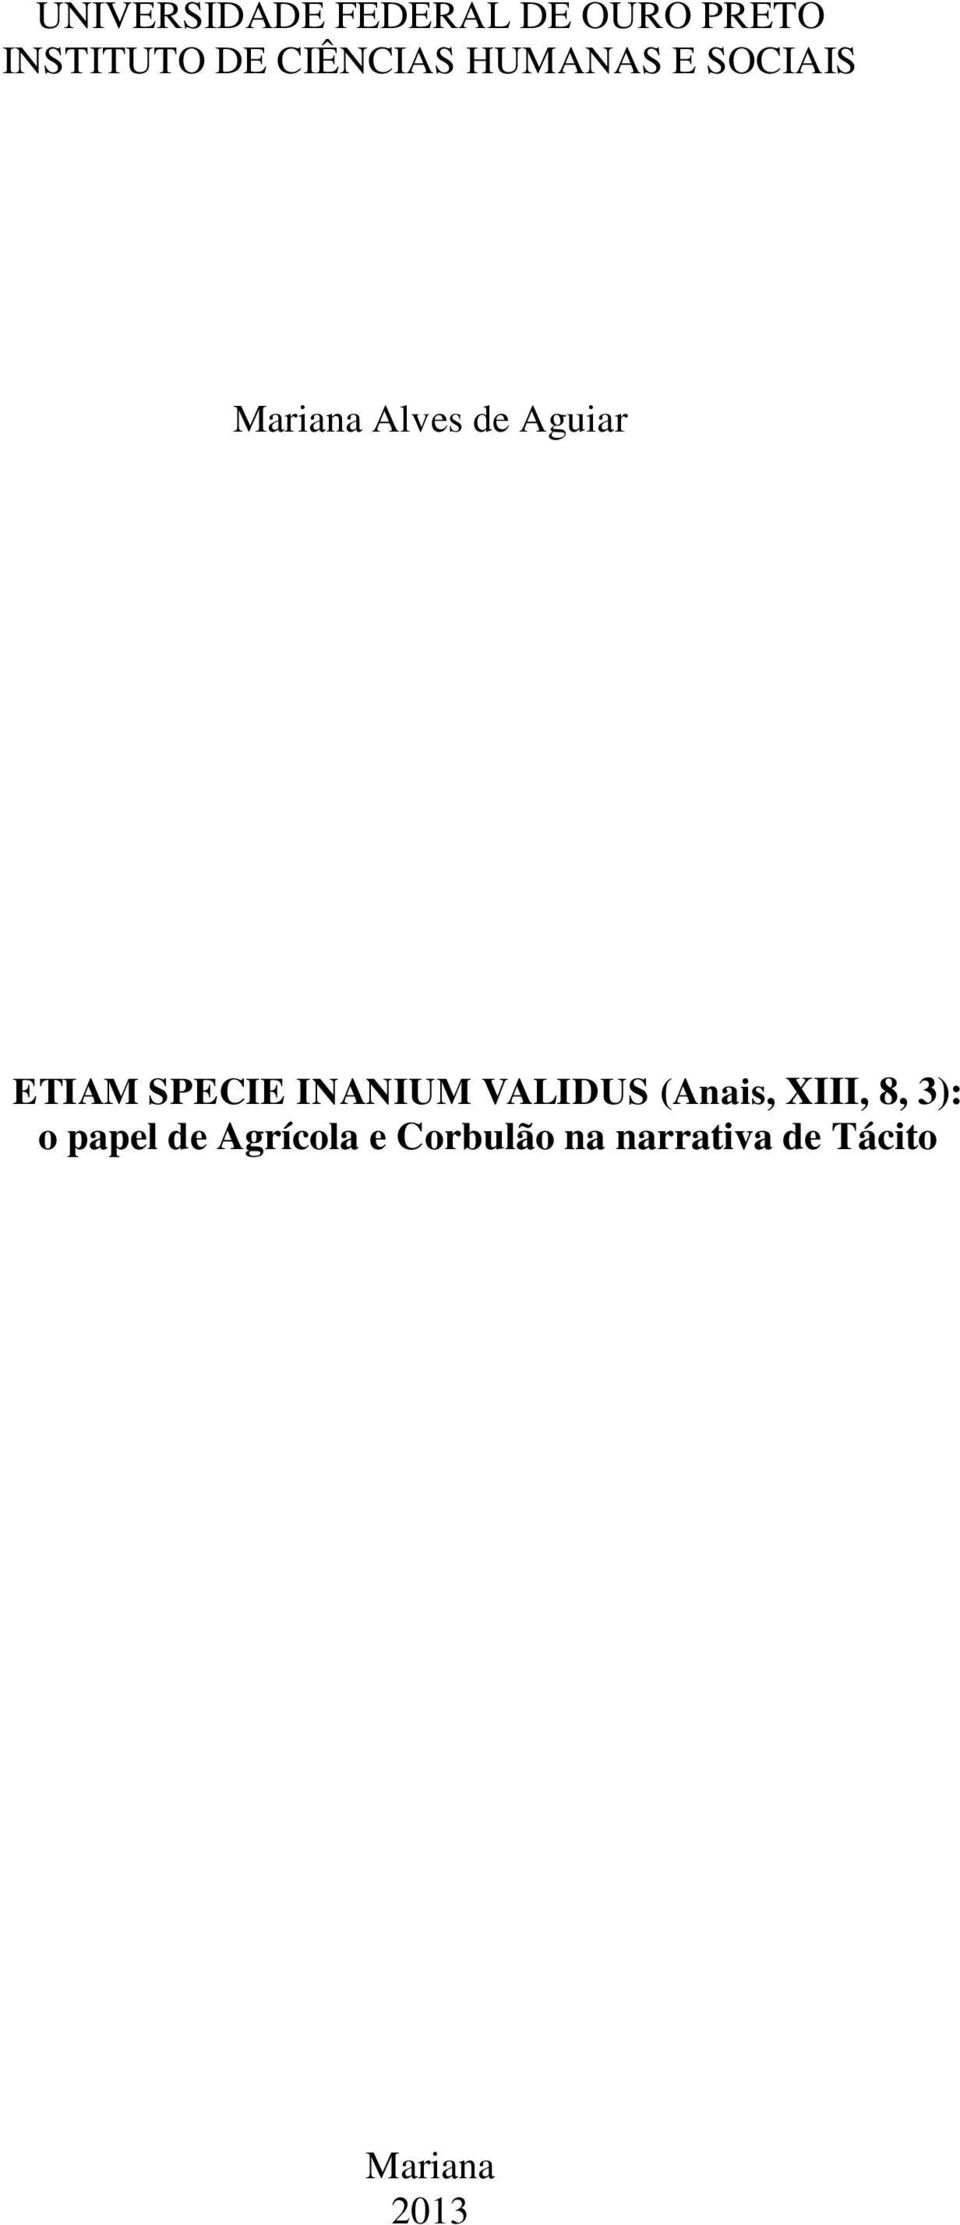 ETIAM SPECIE INANIUM VALIDUS (Anais, XIII, 8, 3): o